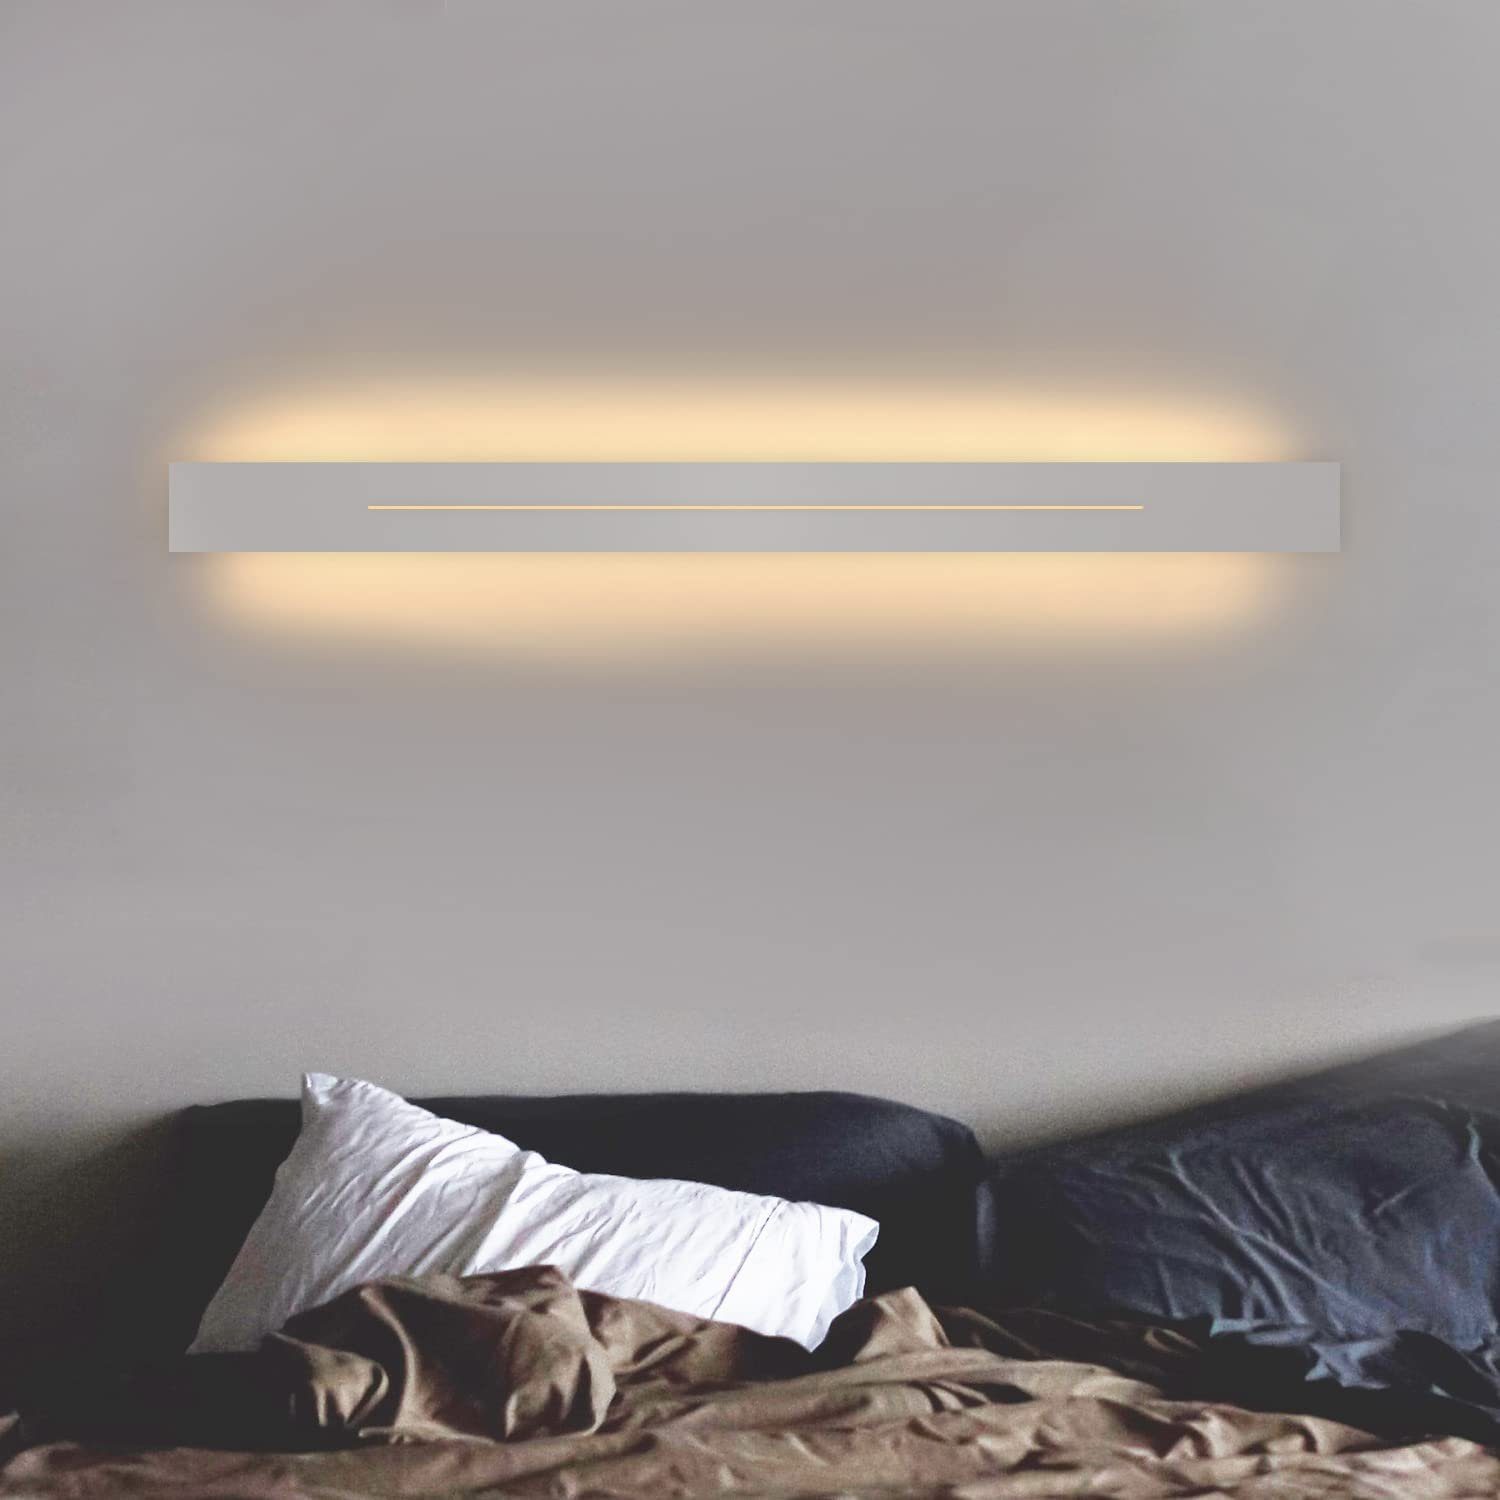 Nettlife LED Wandleuchte innen 60CM Modern Wandlampe Warmweiss Weiß 20W Wandbeleuchtung, LED fest integriert, Warmweiß, für Treppenhaus Schlafzimmer Flur Wohnzimmer Kinderzimmer | Wandleuchten